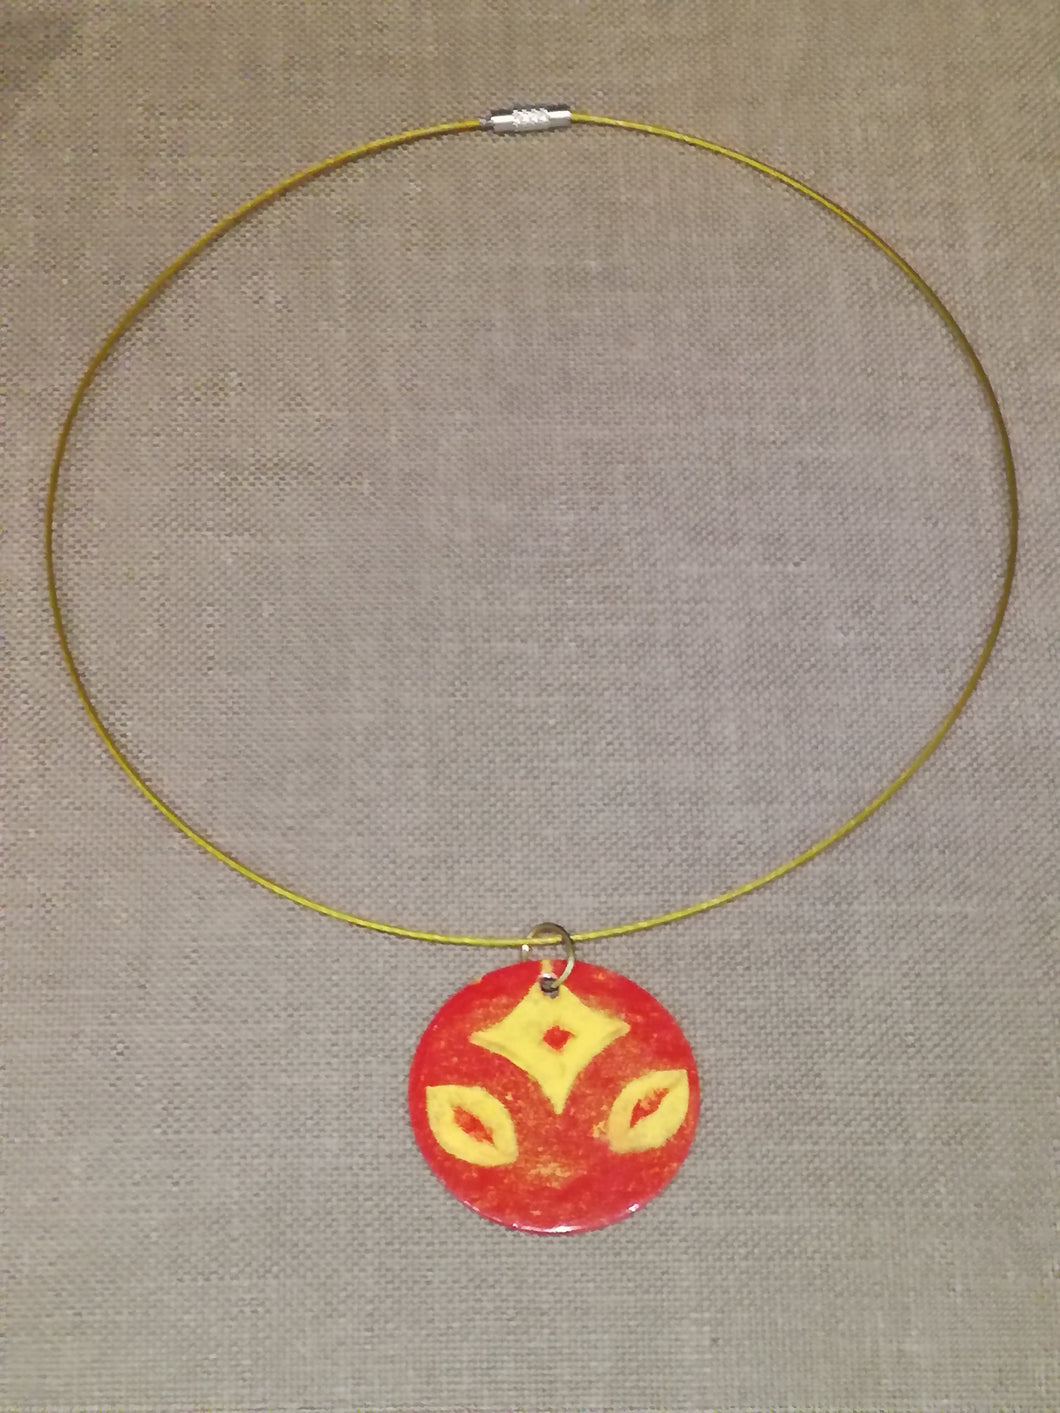 collier avec pendentif rouge et jaune